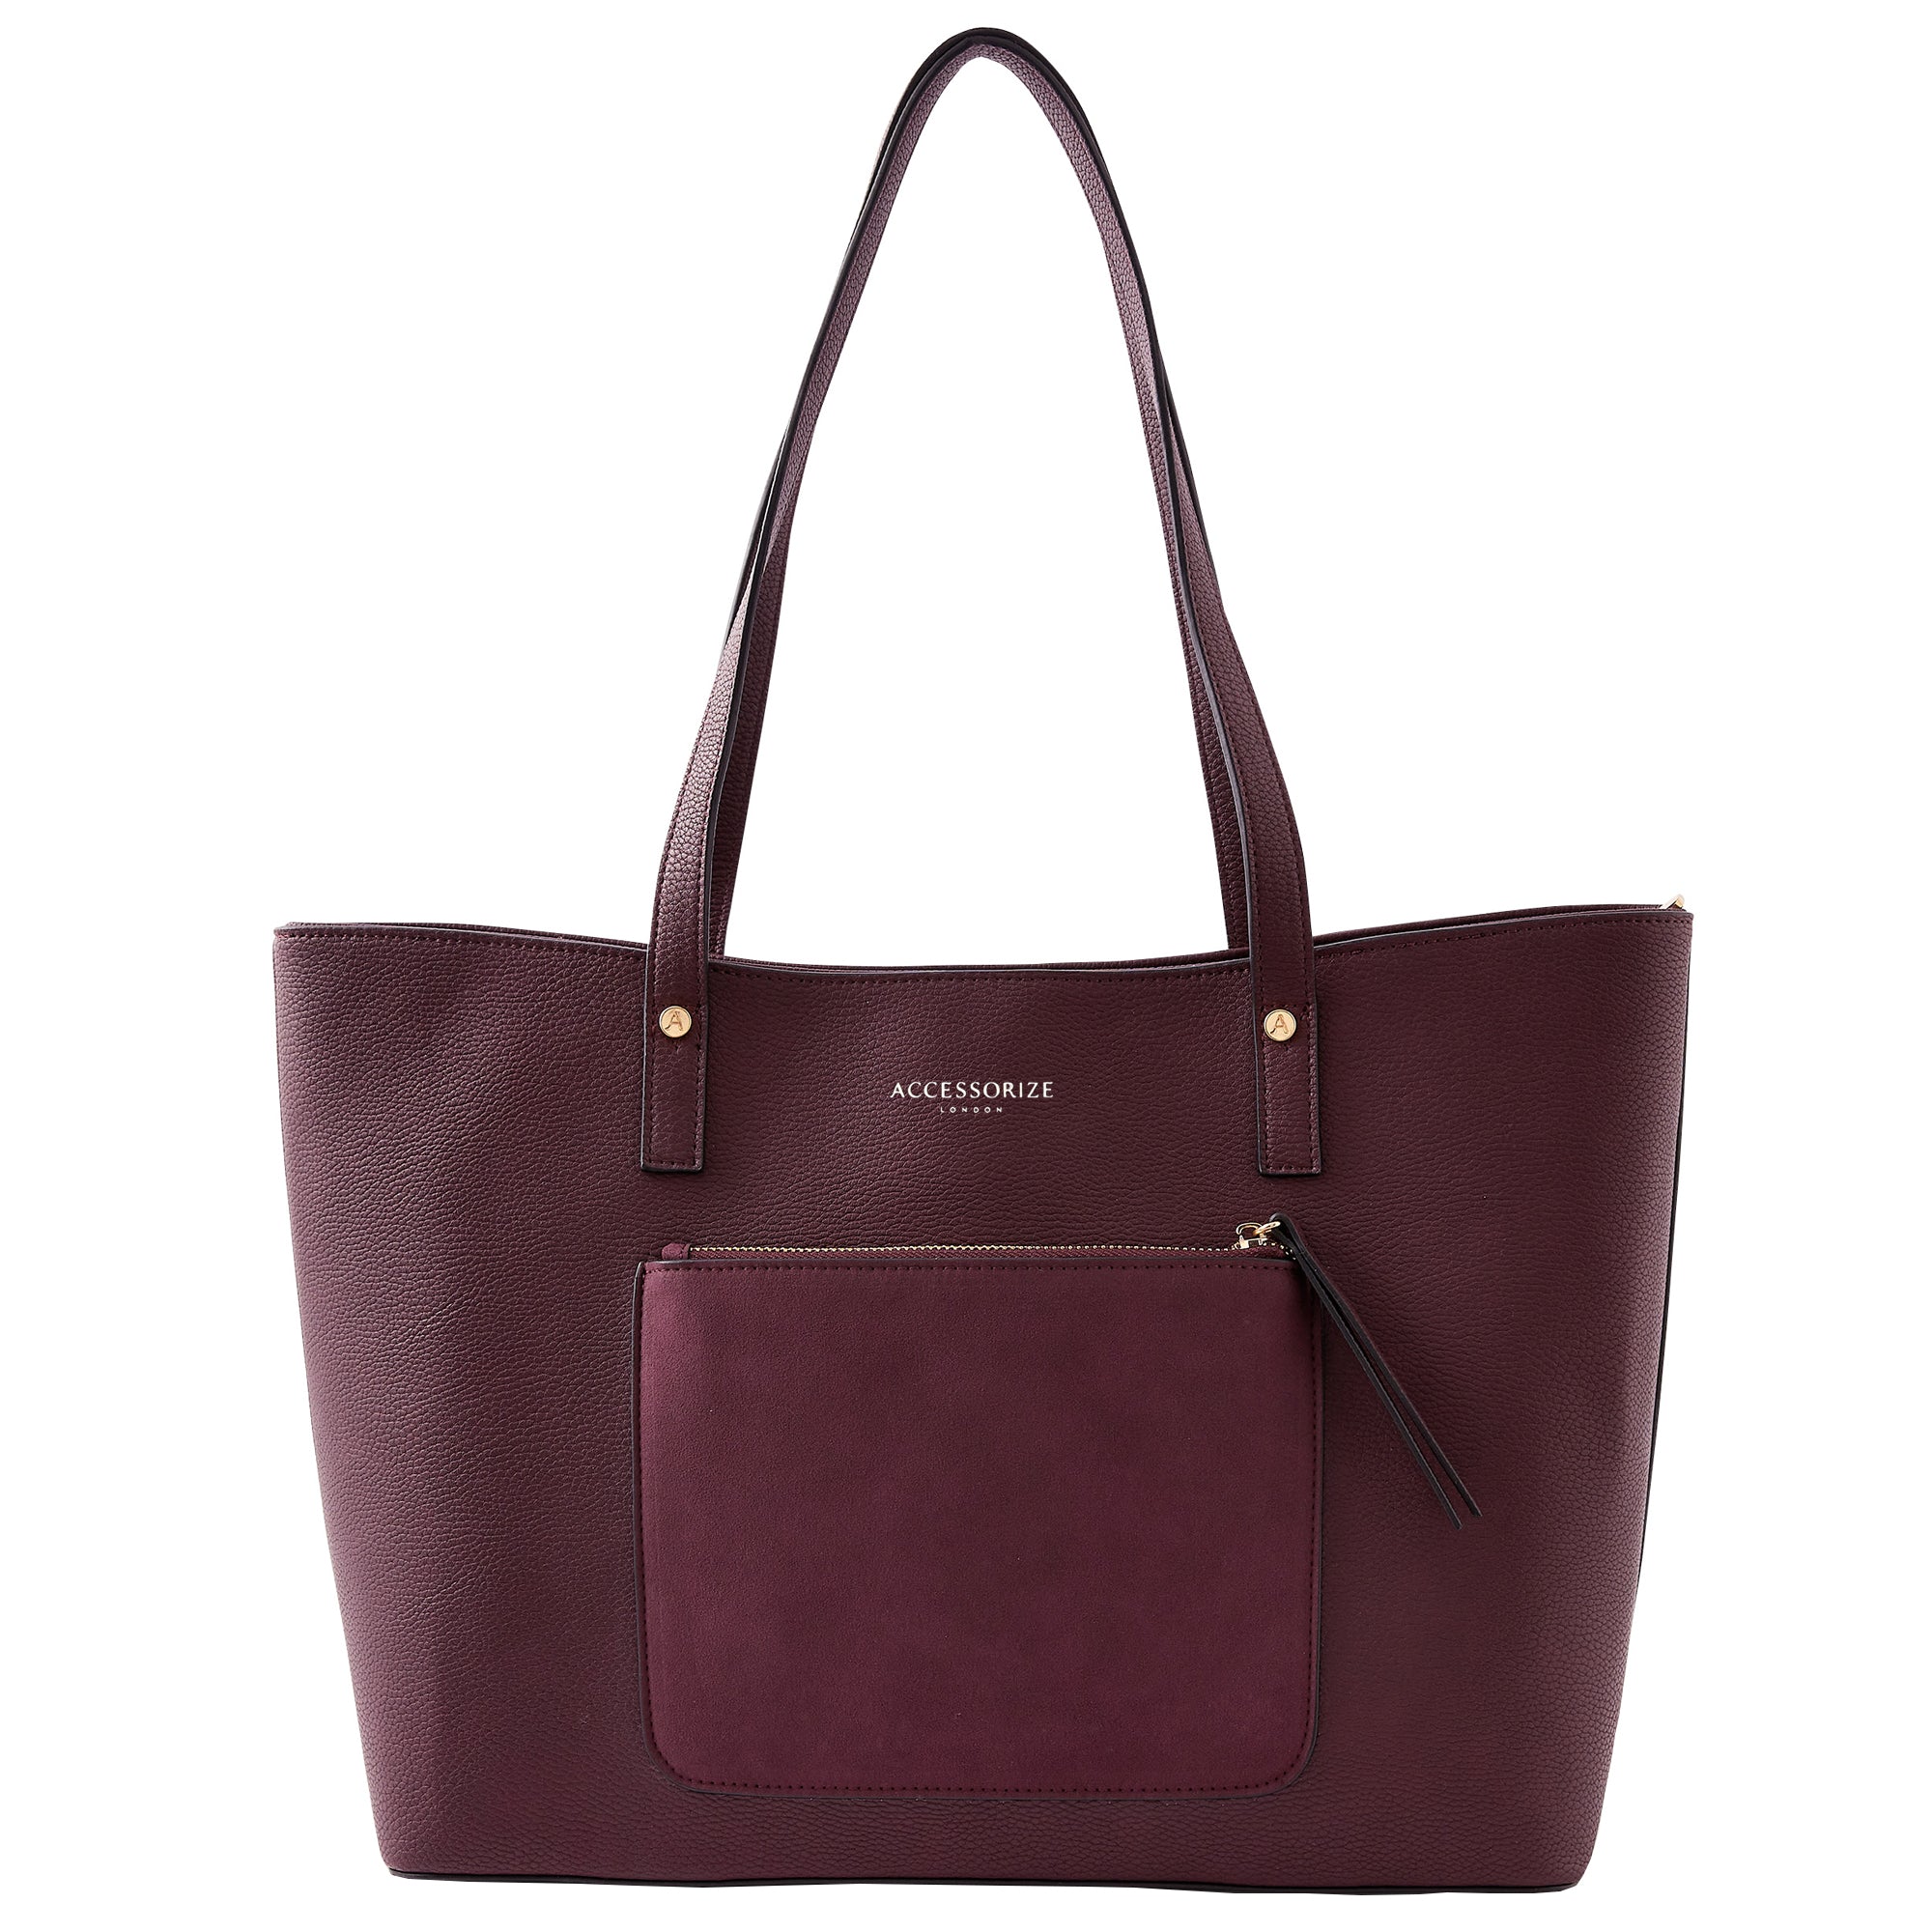 Women Burgundy Handbags - Buy Women Burgundy Handbags online in India